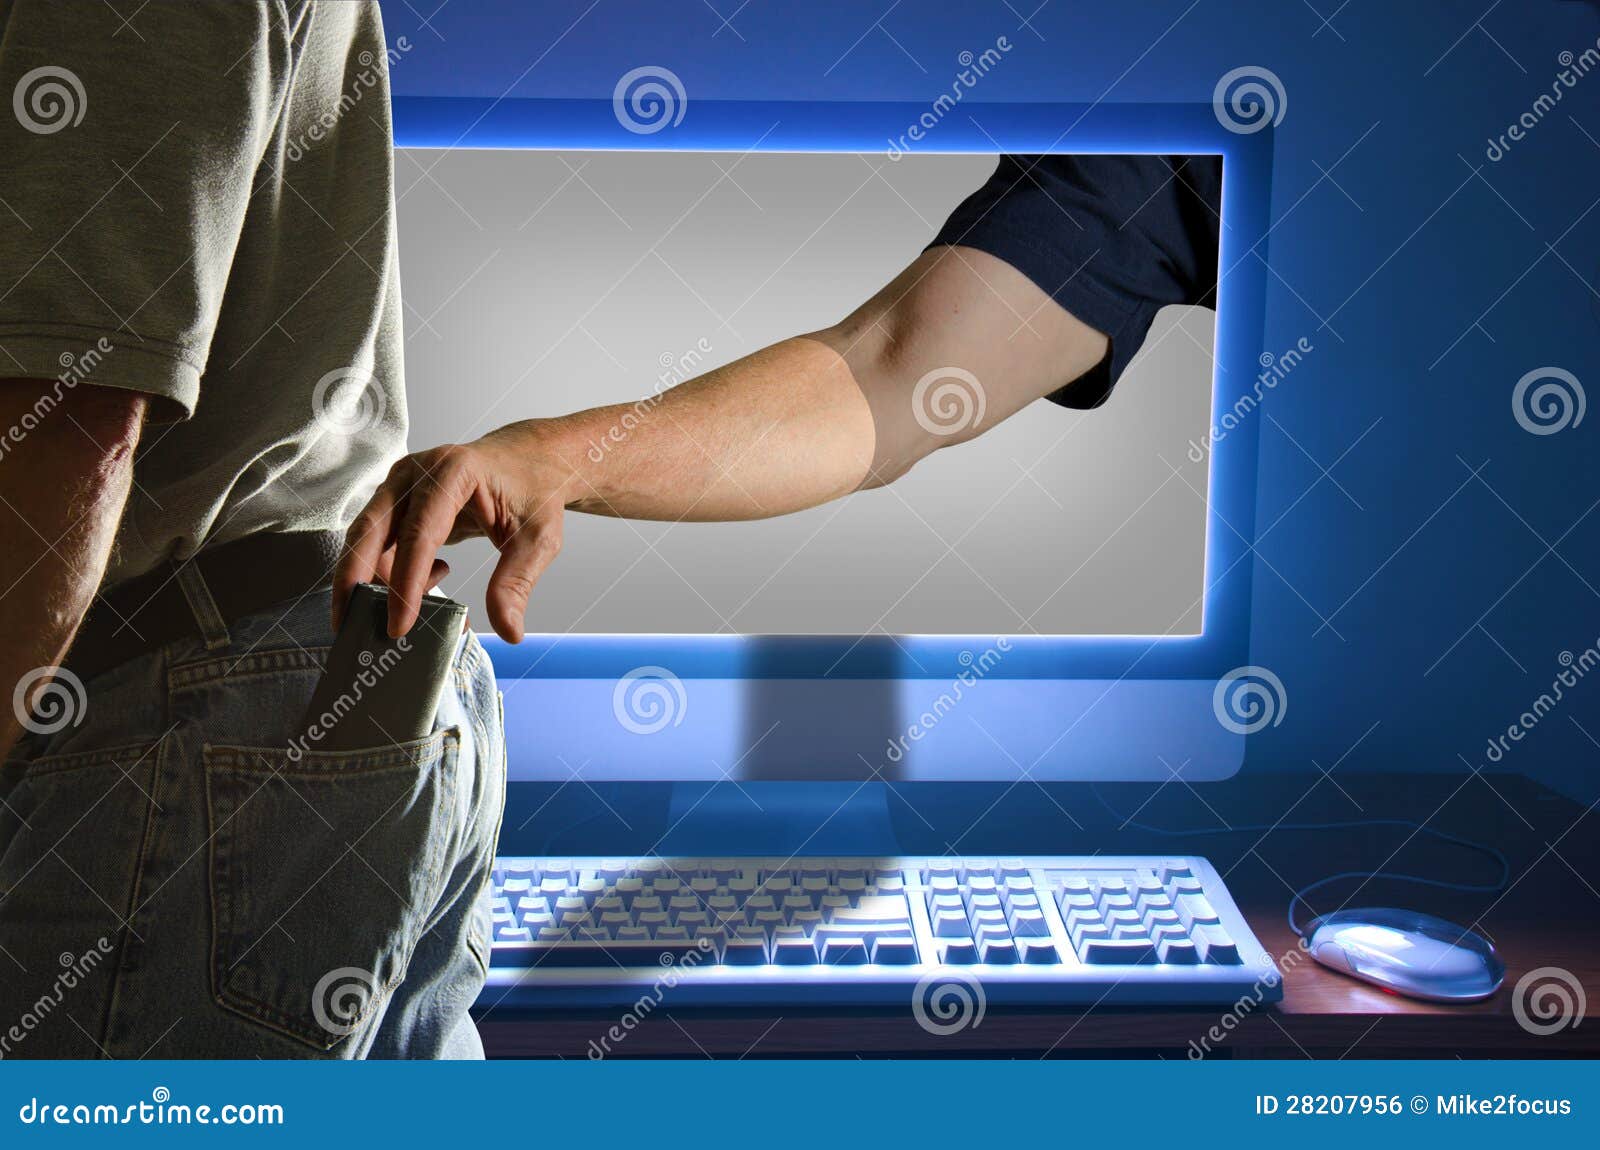 Computer Identity Theft Stock Photo Image Of Website 28207956